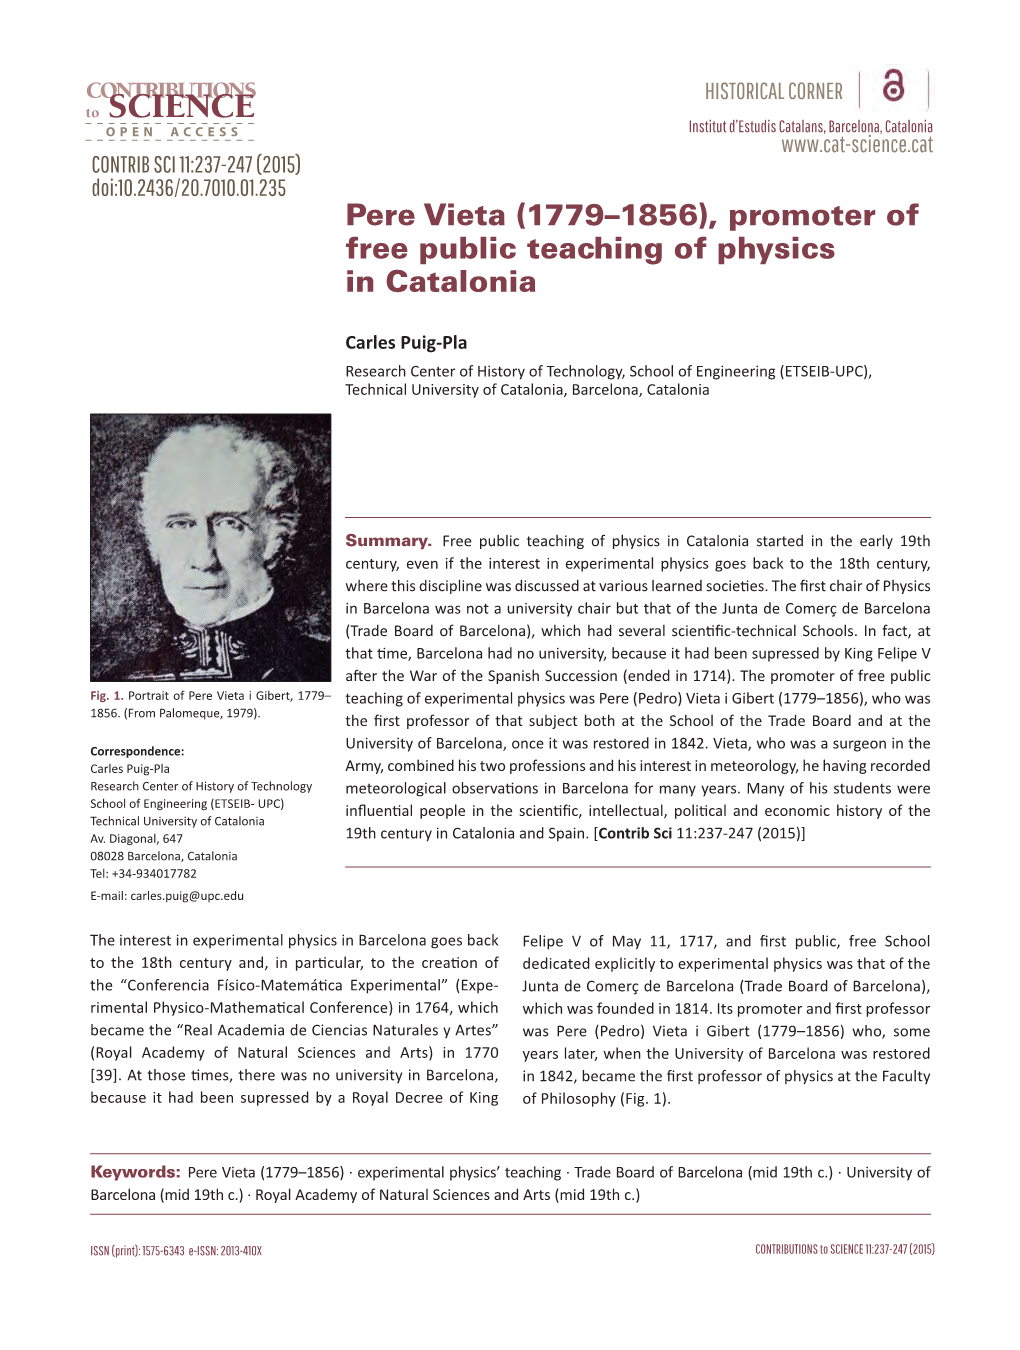 Pere Vieta (1779–1856), Promoter of Free Public Teaching of Physics in Catalonia